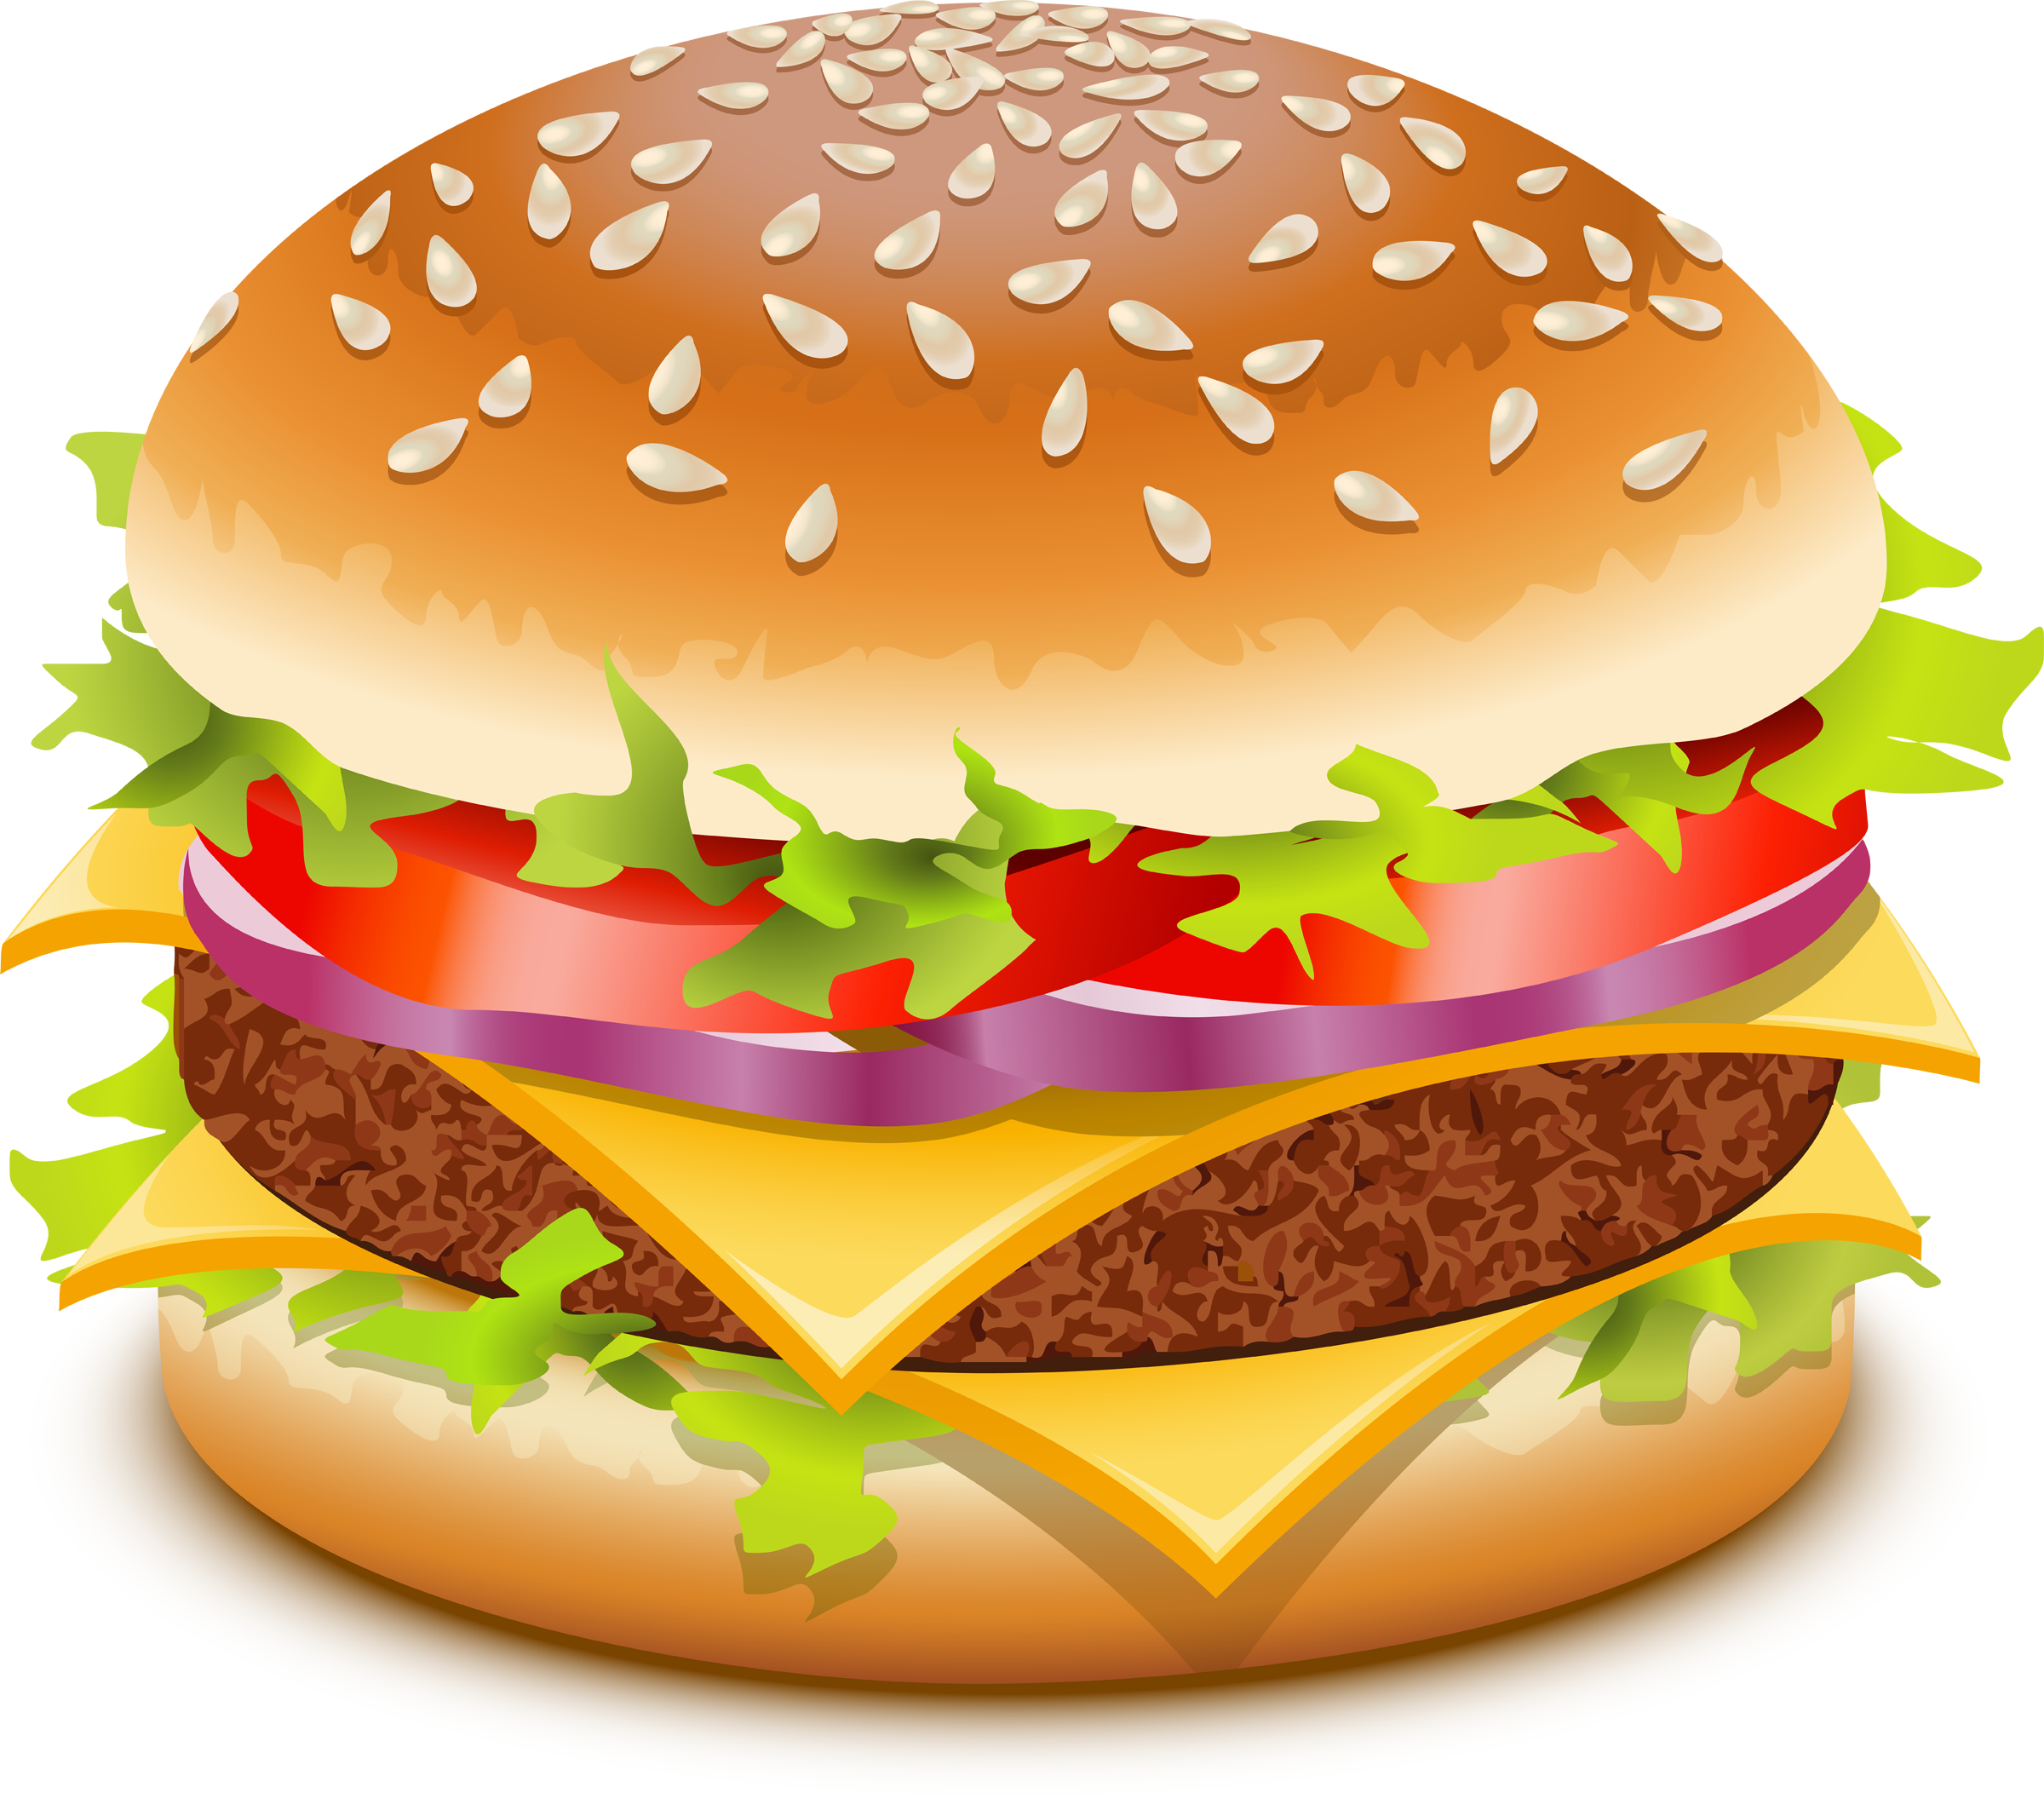 Hamburger burger and sandwich